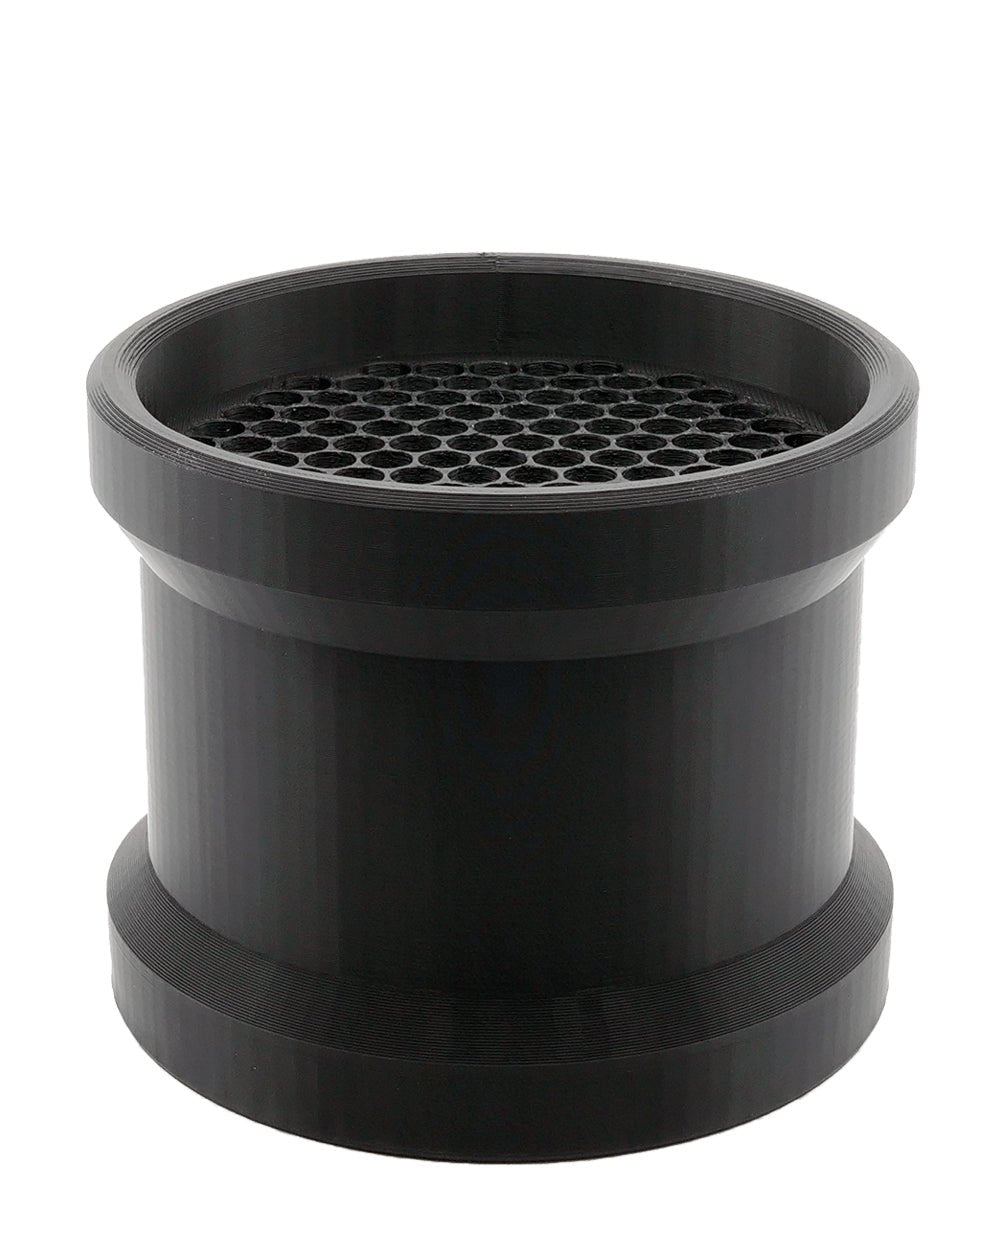 HUMBOLDT | Black Pre-Rolled Cones Filling Machine Starter Kit 98mm Slim | Fill 121 Cones Per Run - 3